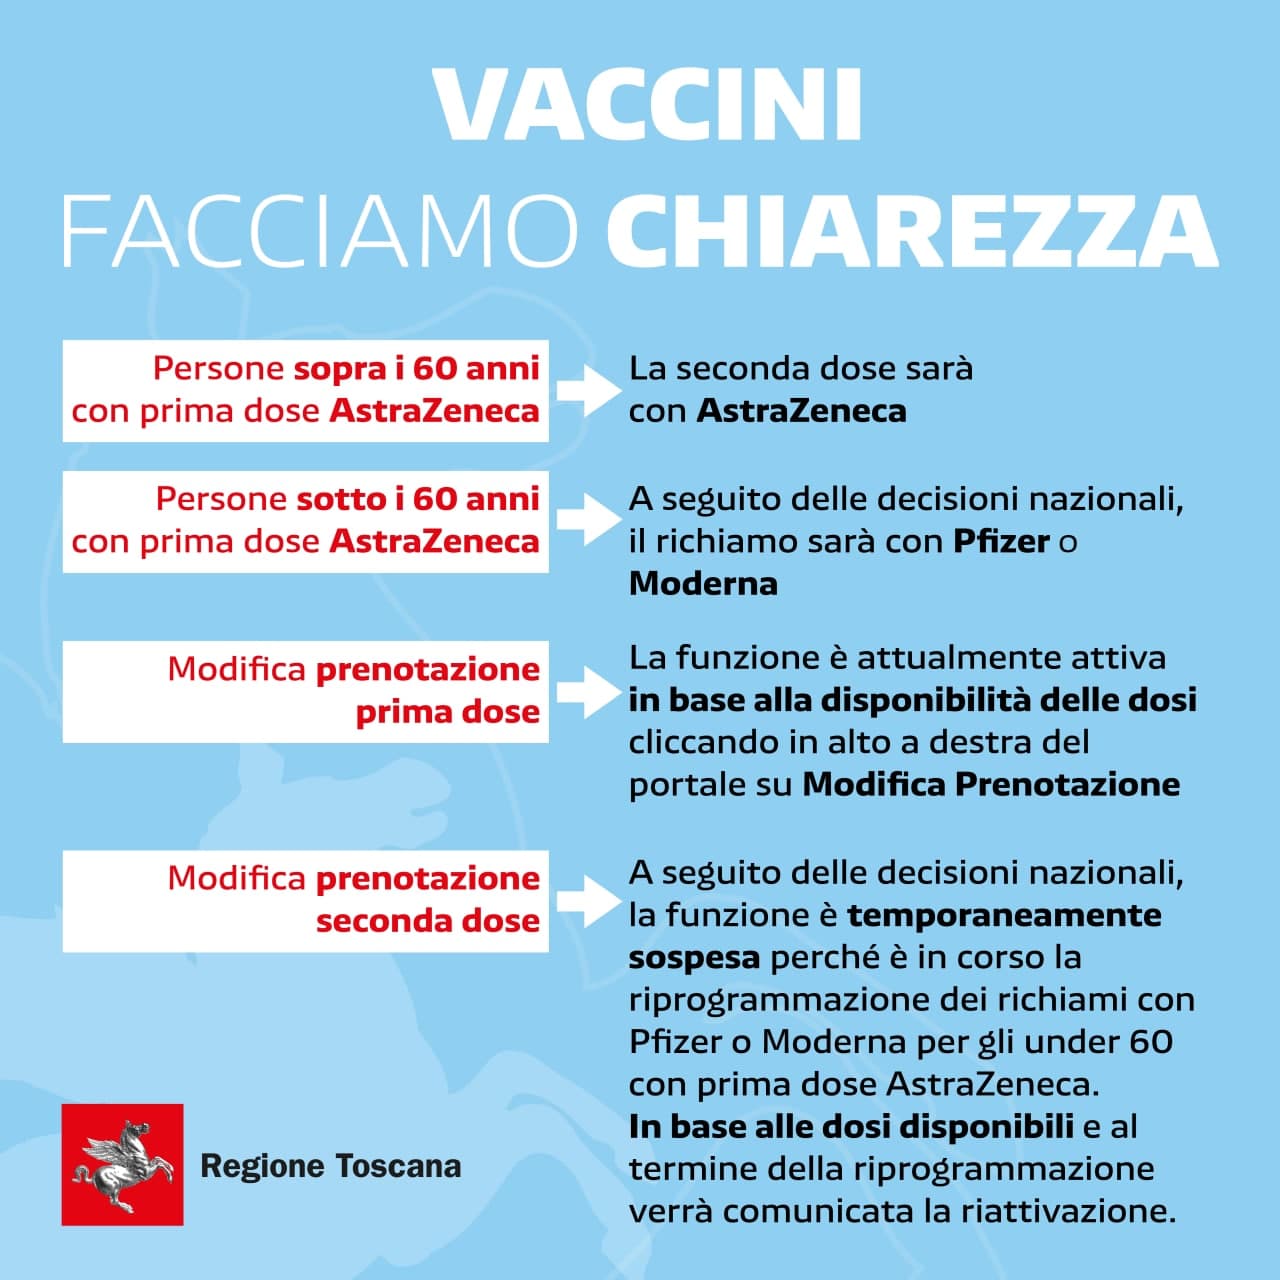 Precisazioni sui vaccini in Toscana